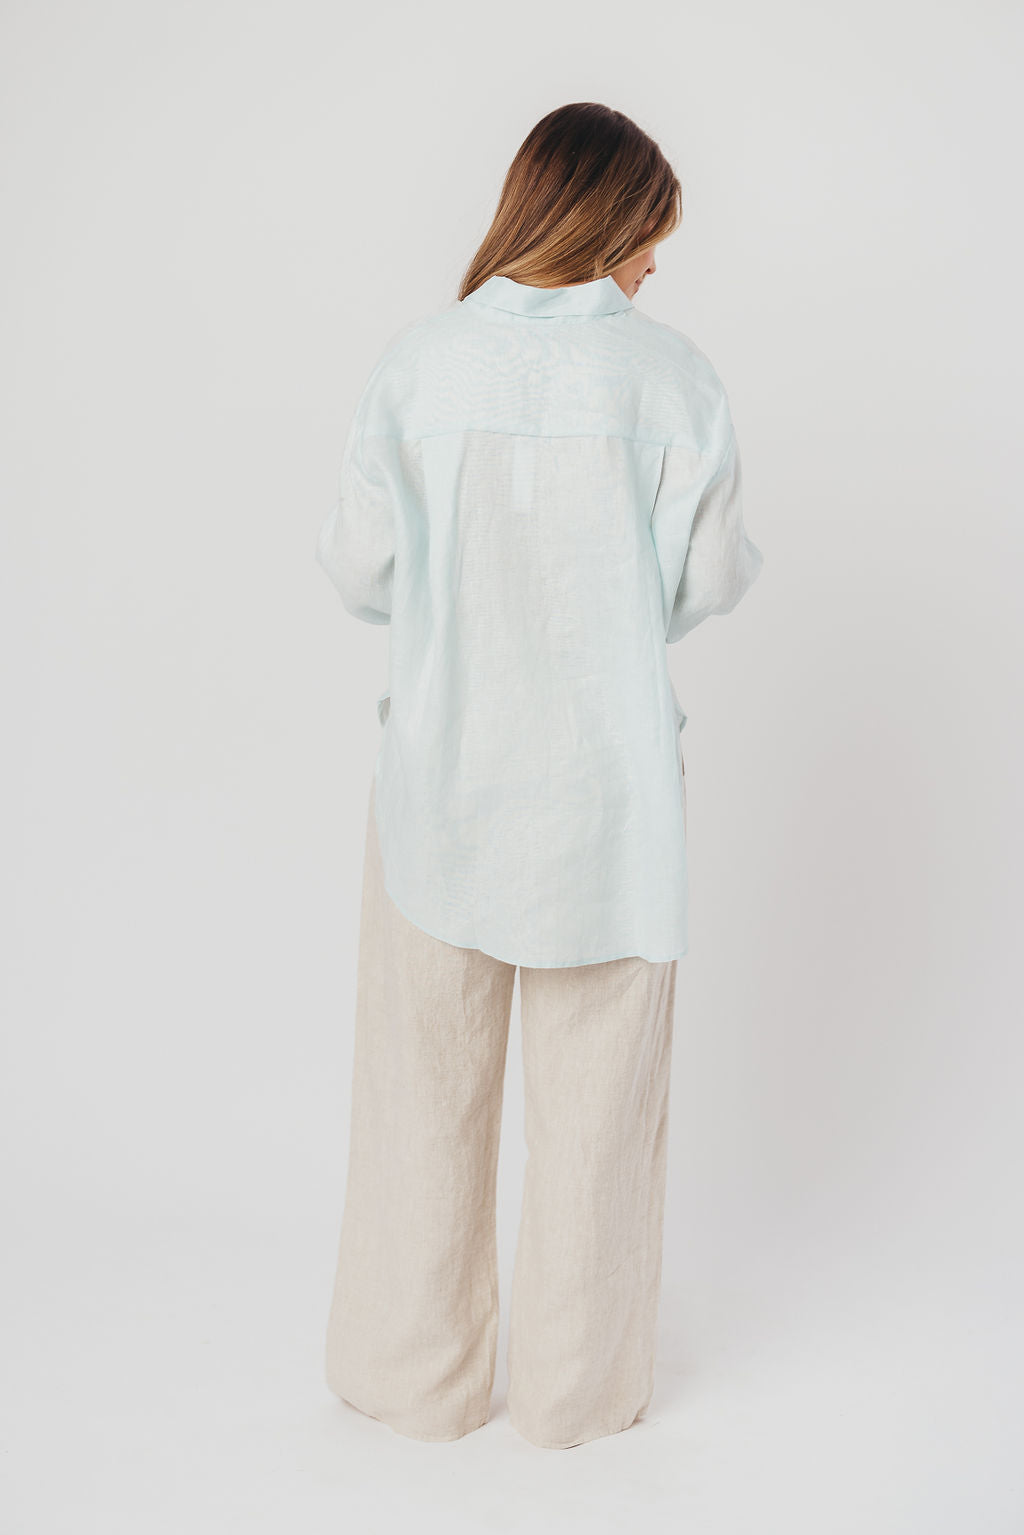 Helen 100% Linen Shirt in Baby Blue - Nursing Friendly